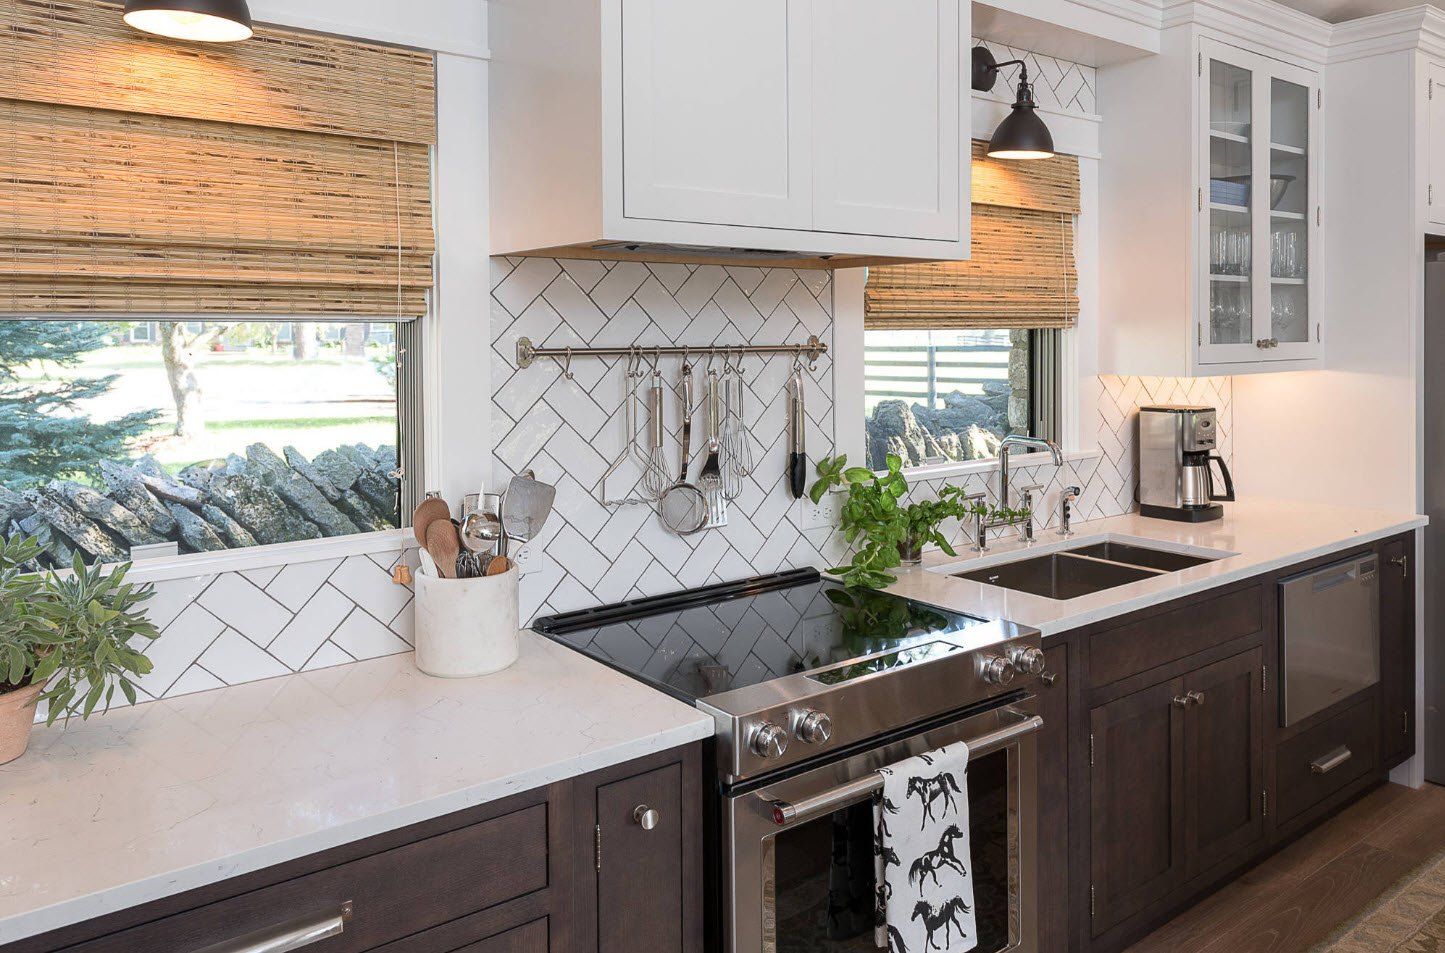 120 Square Feet Kitchen Interior Design Ideas with Photos. Mosaic tiles at the splashback zone of mid-century styled kitchen